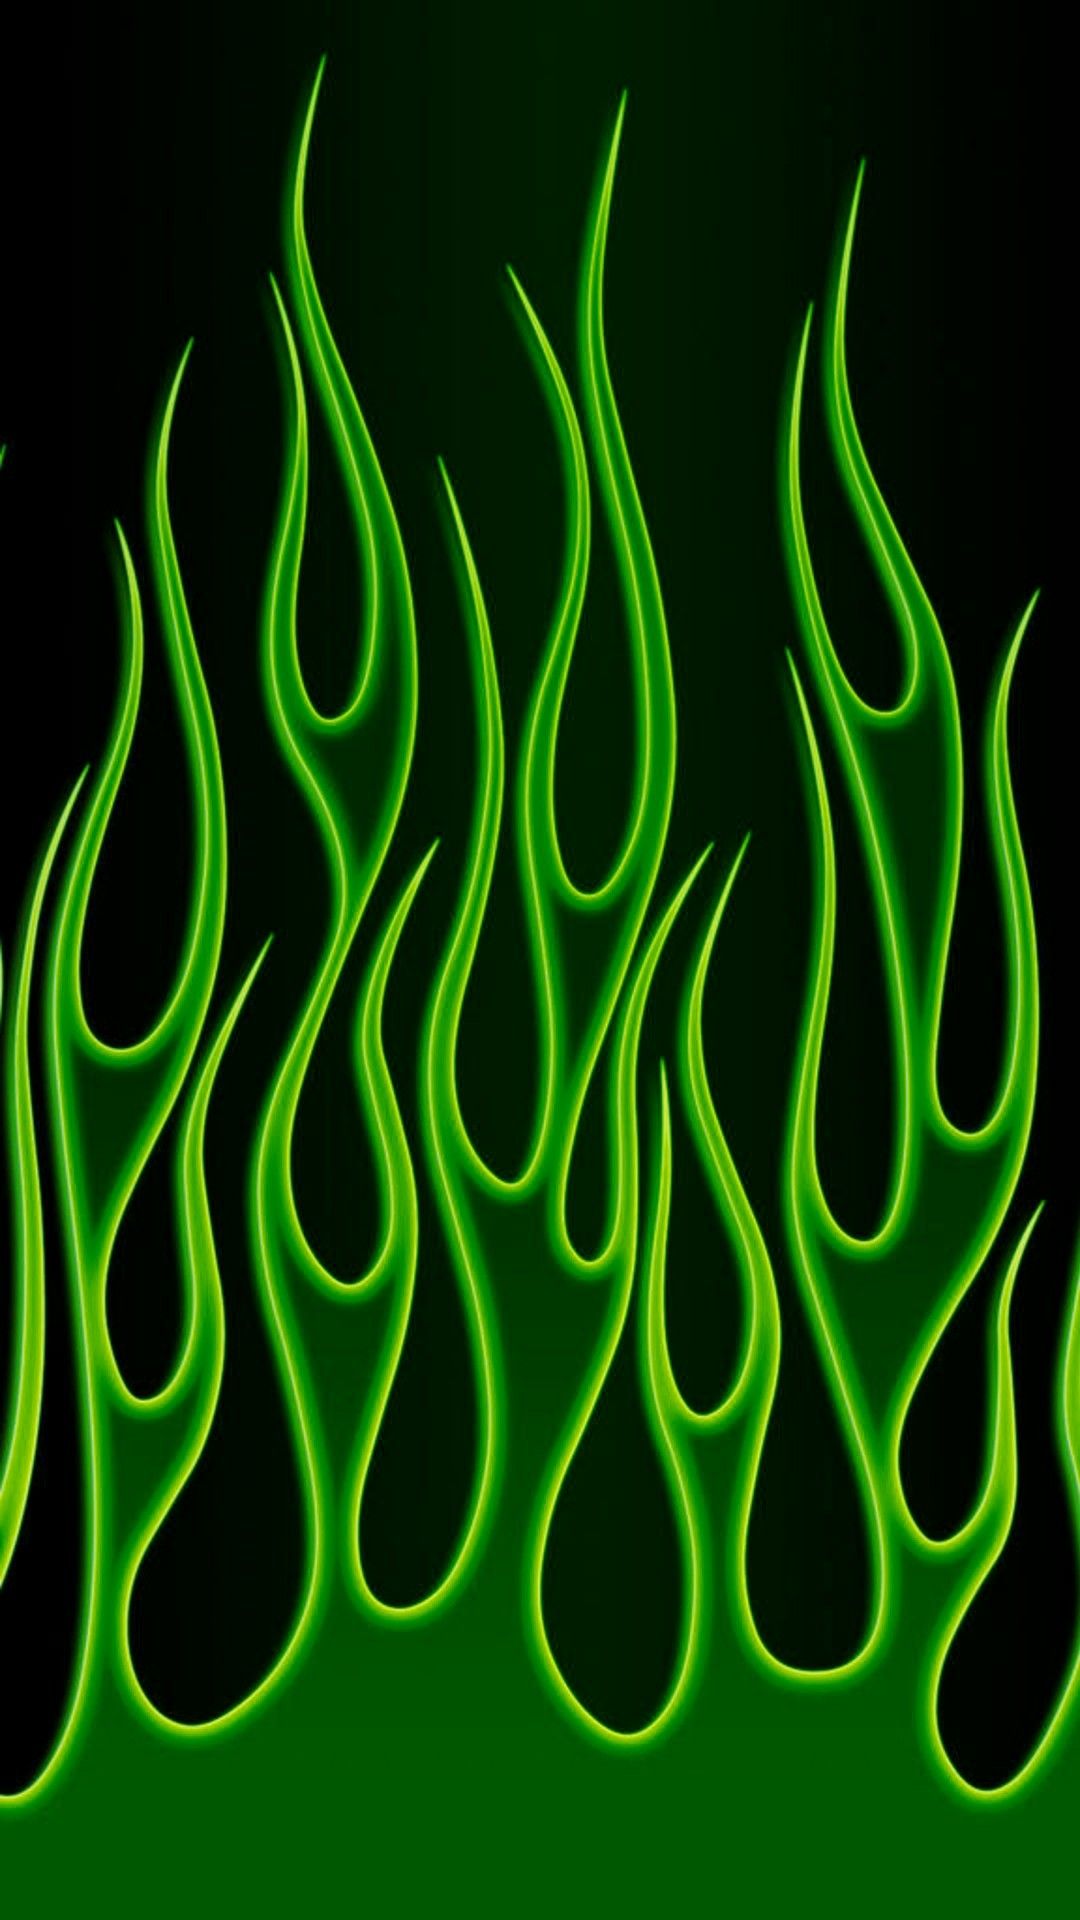 ps vita green flame